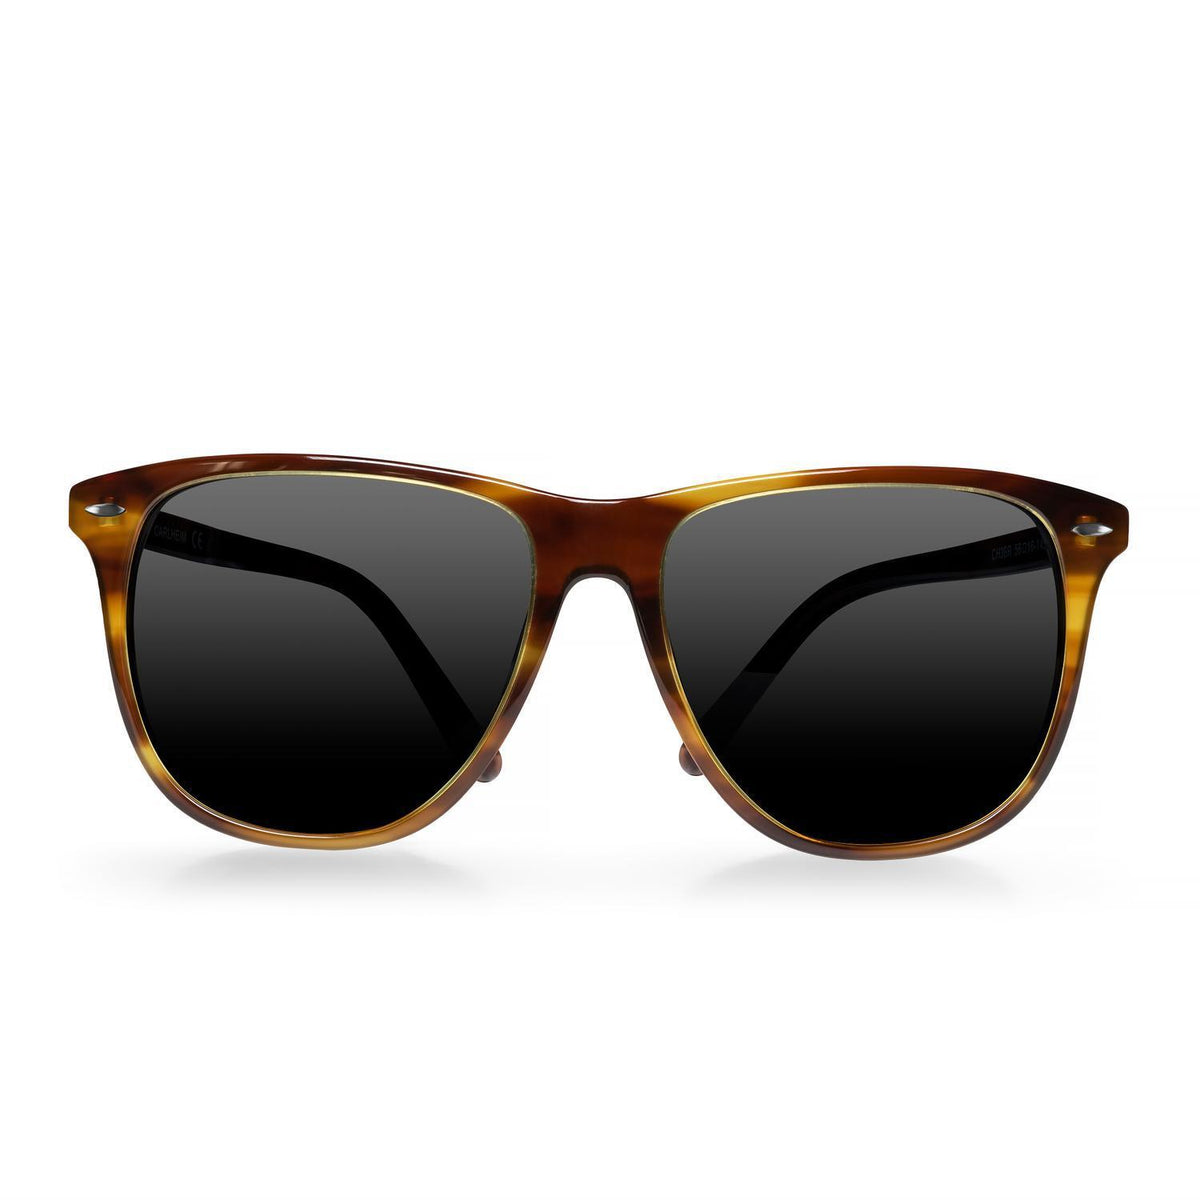 Men's sunglasses - AXEL dark lens UV (brown) – Carlheim